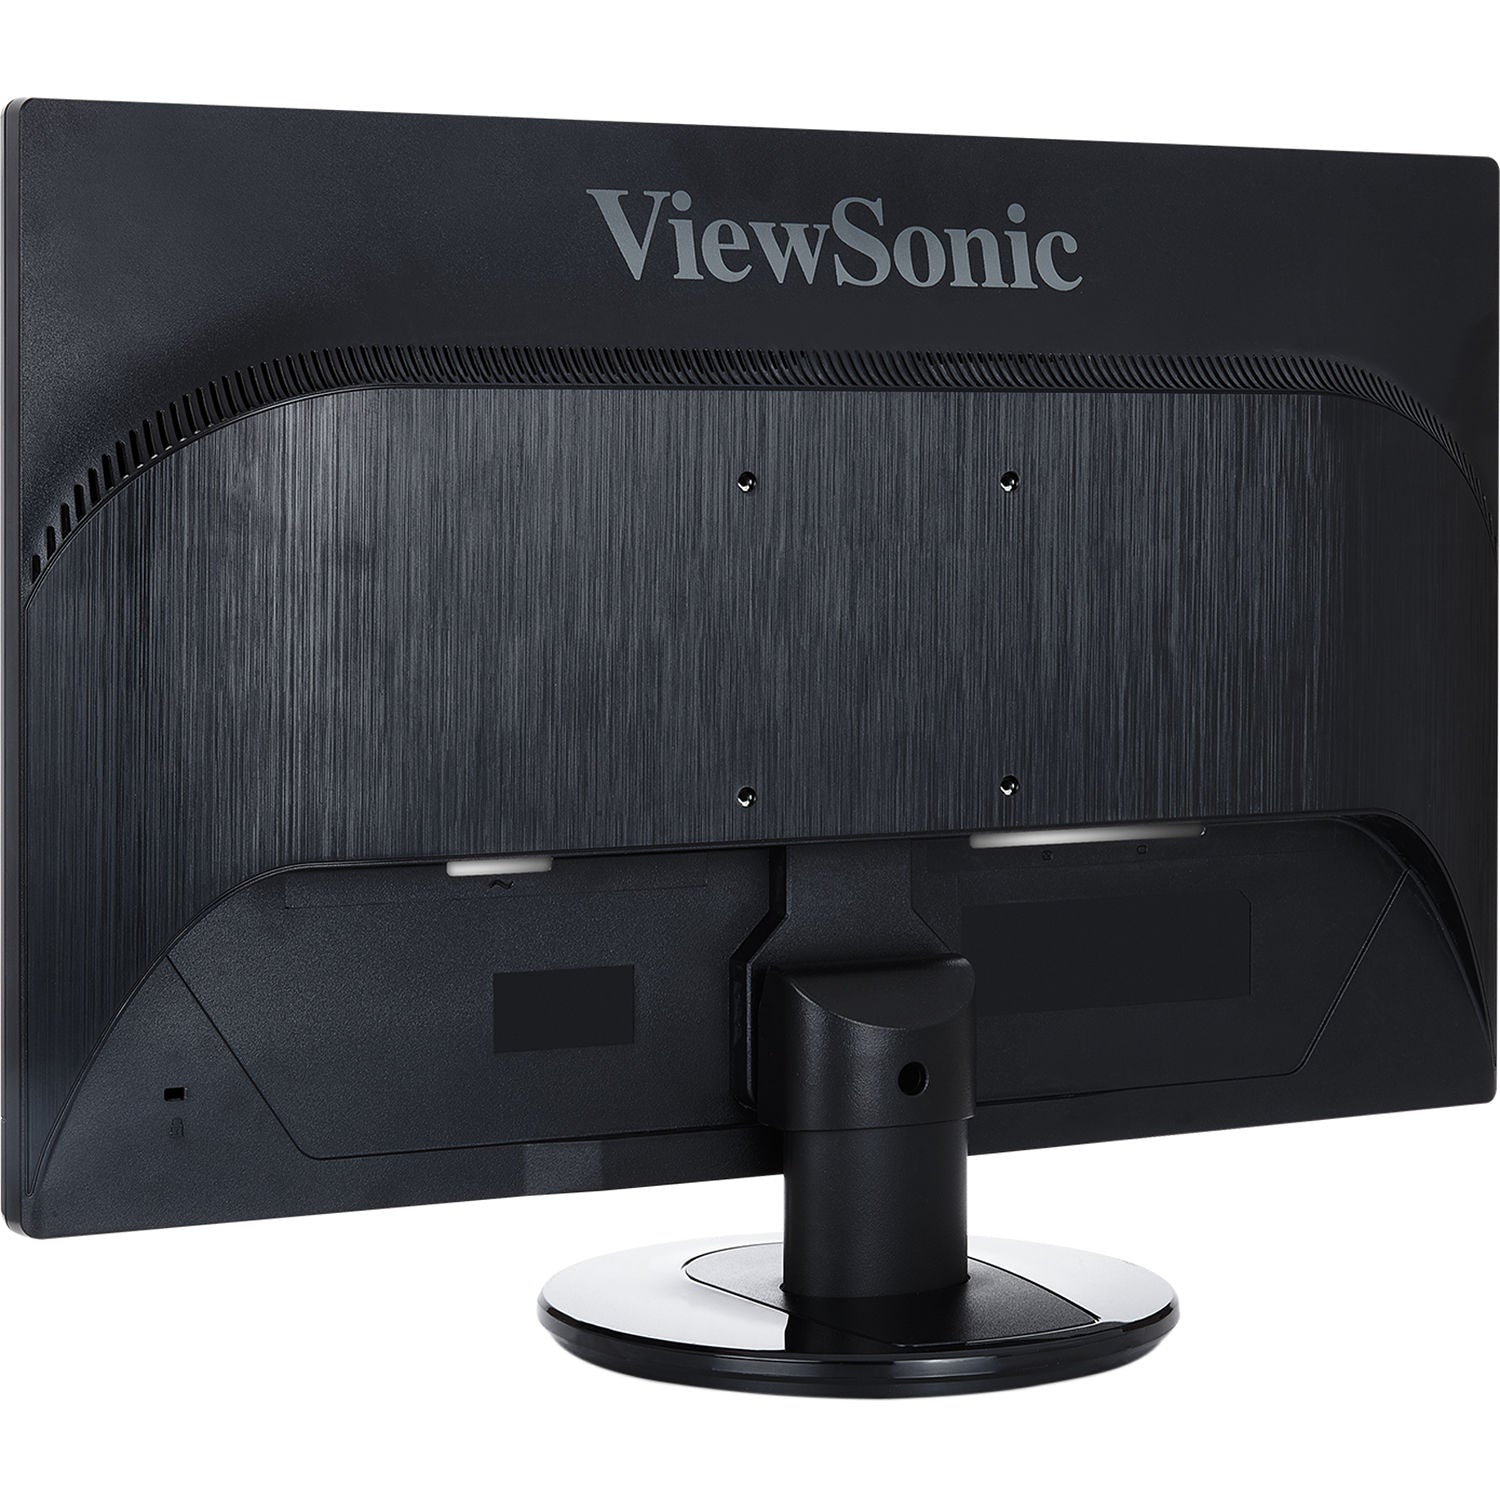 ViewSonic VA2446MH-LED-S 24" Full HD 1080p LED Monitor - Certified Refurbished